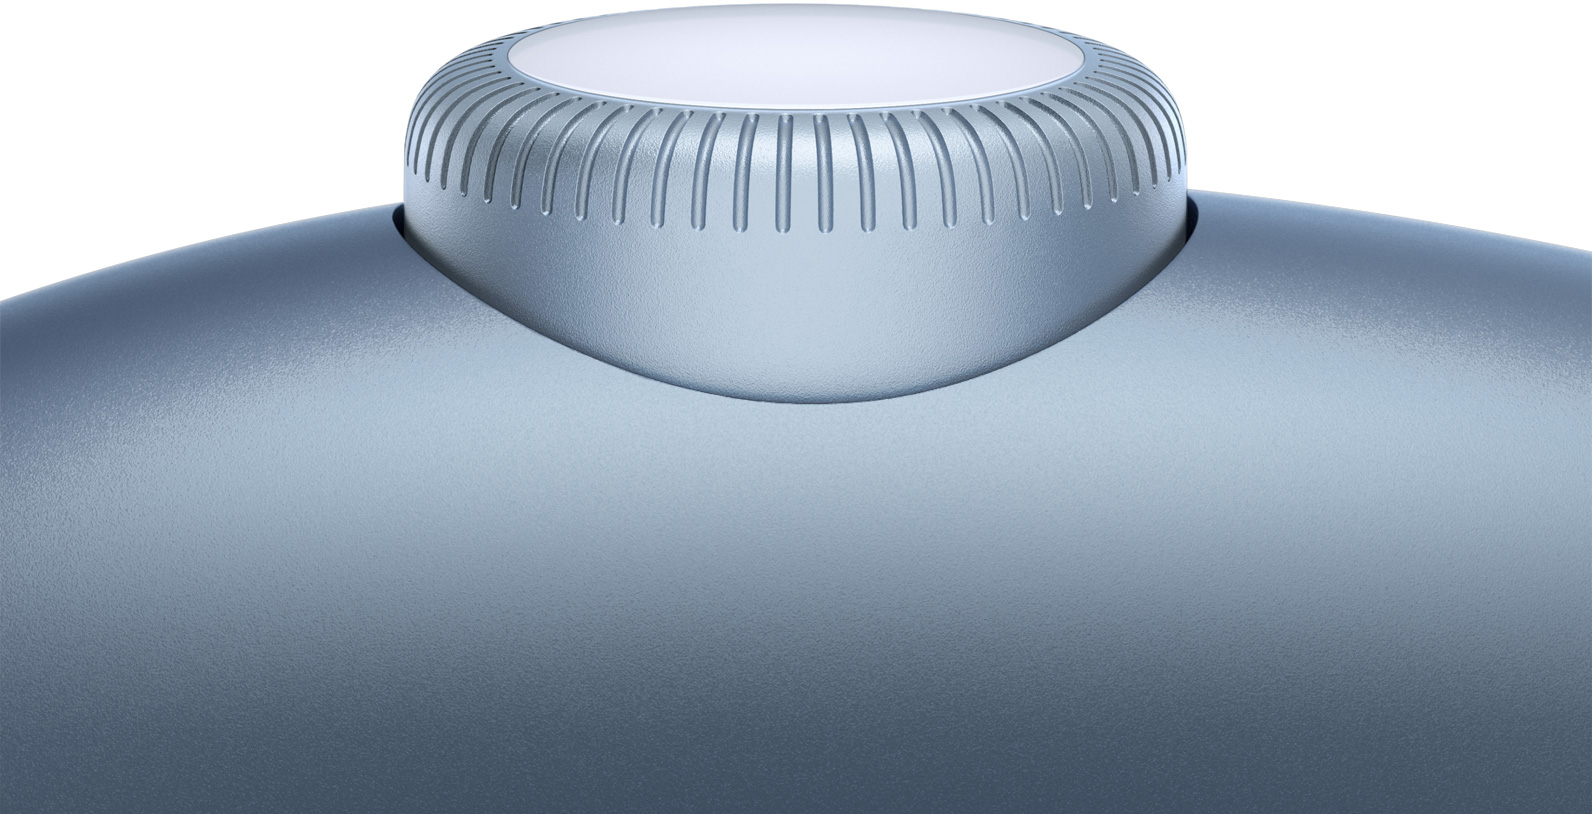 AirPods Max - Apple (CA)